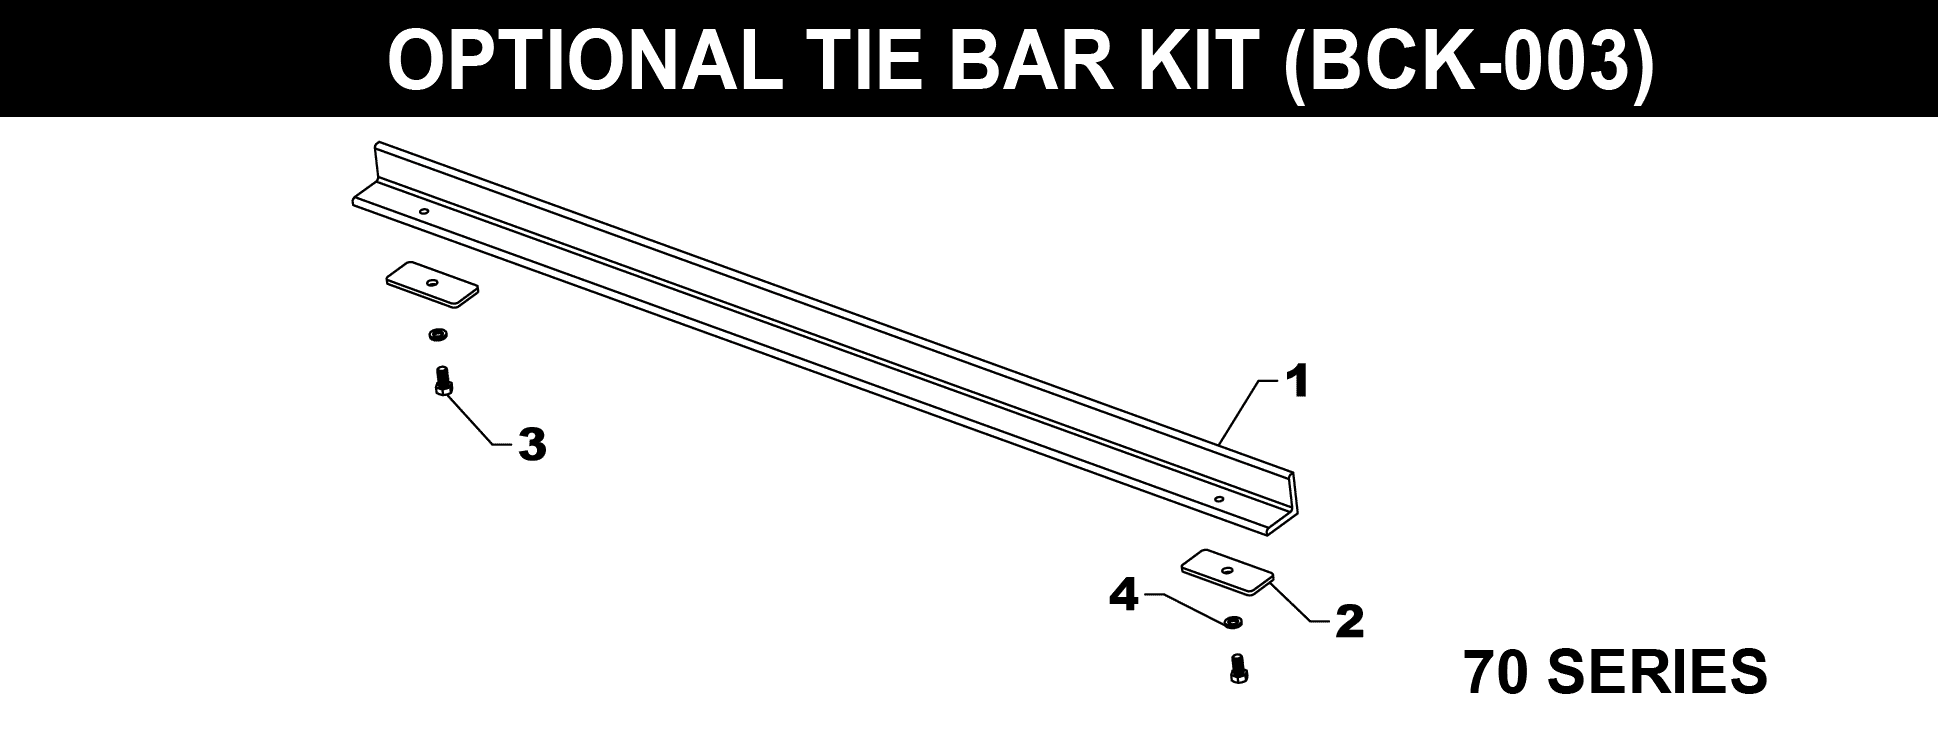 BCK-003 Tie Bar Kit